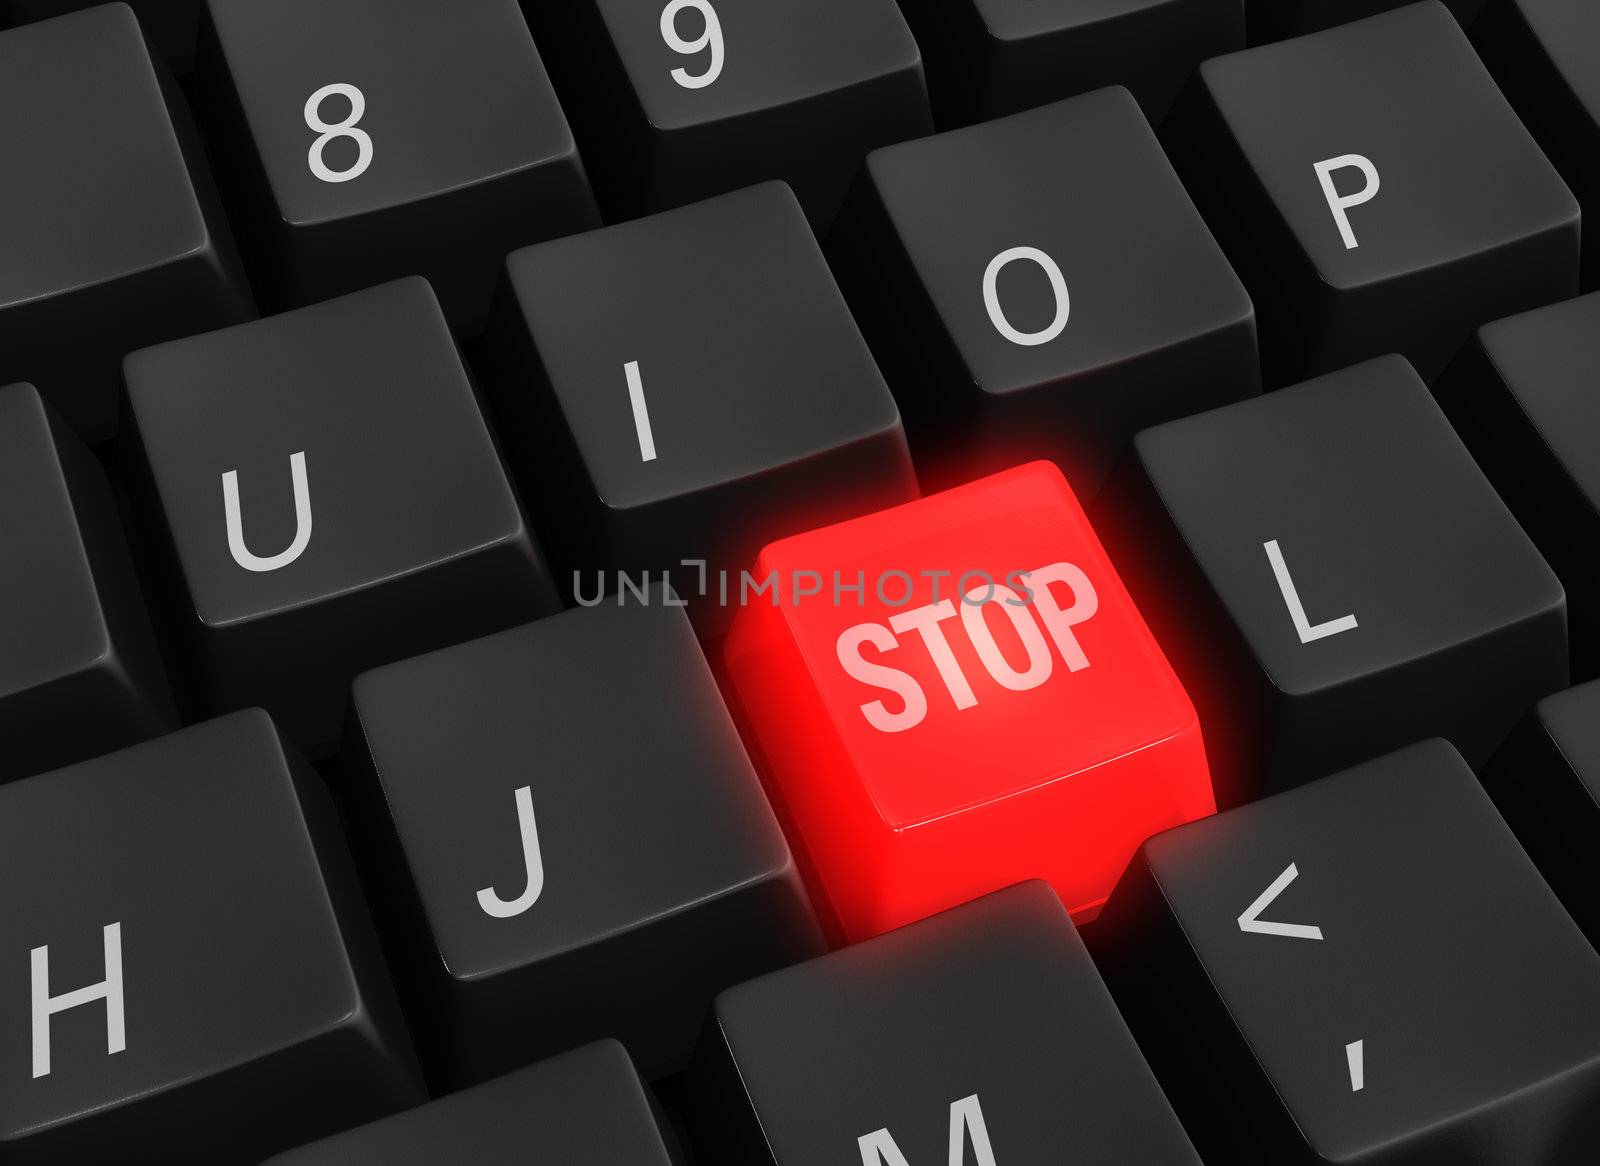 Close up photo-real illustration of black computer keyboard keys surrounding a single red glowing STOP key.